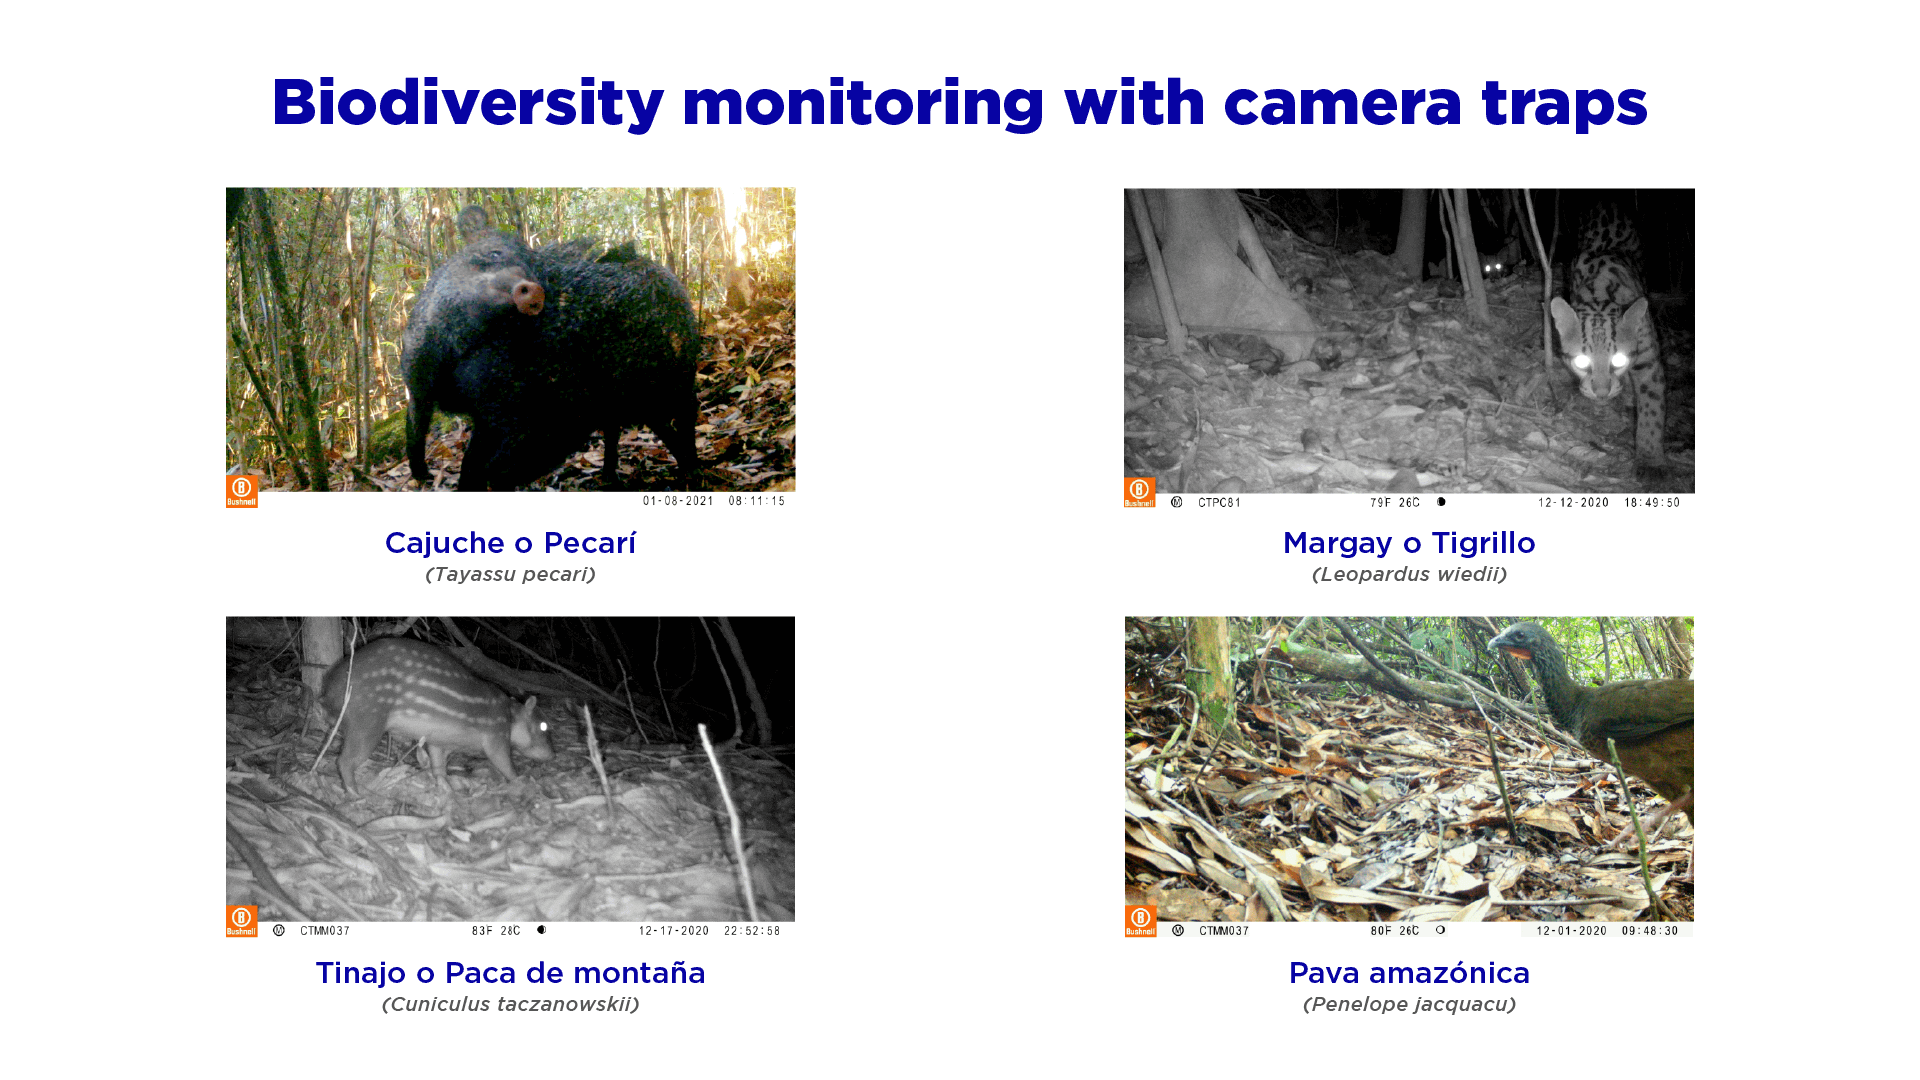 Biodiversity monitoring with camera traps